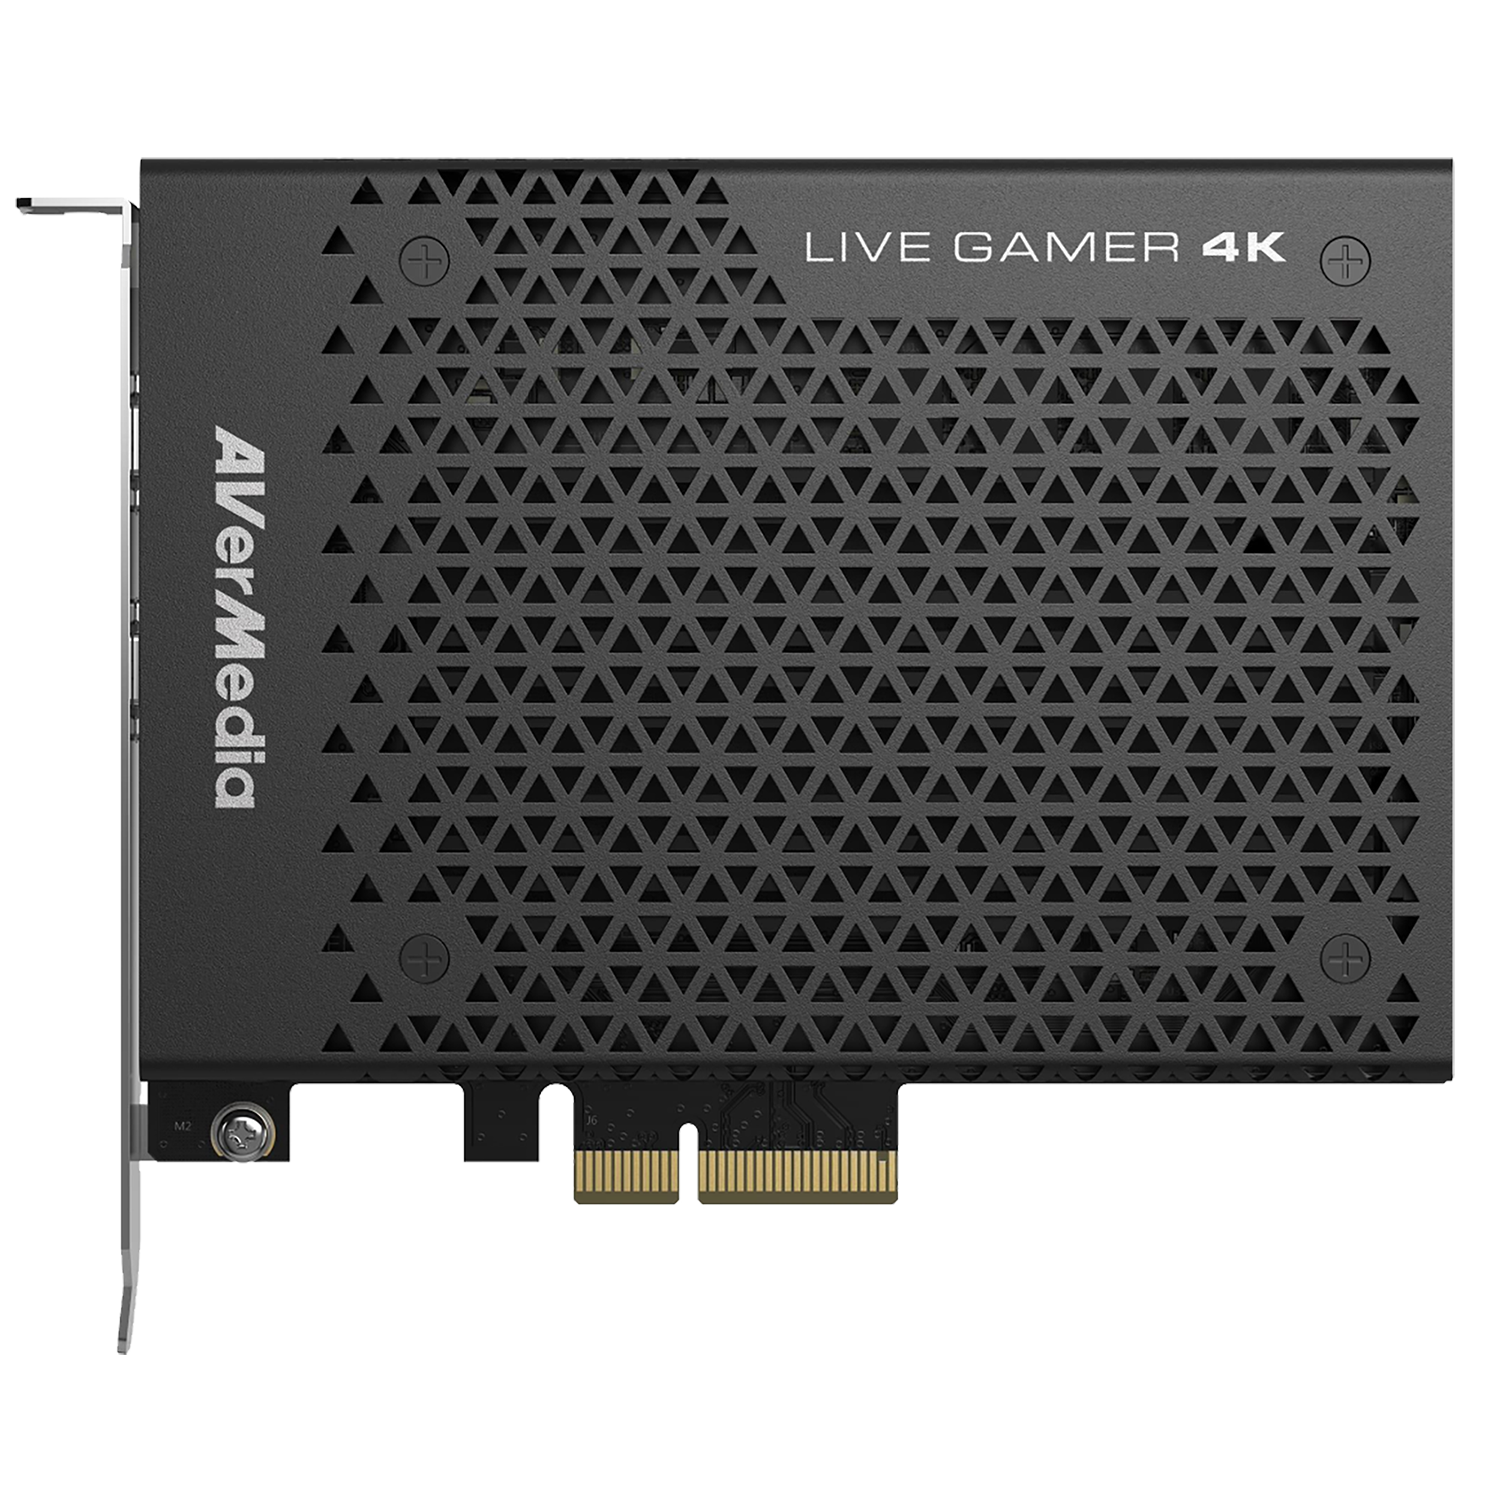 GC573 4K60 HDR10 Internal Capture Card for Streaming | AVerMedia